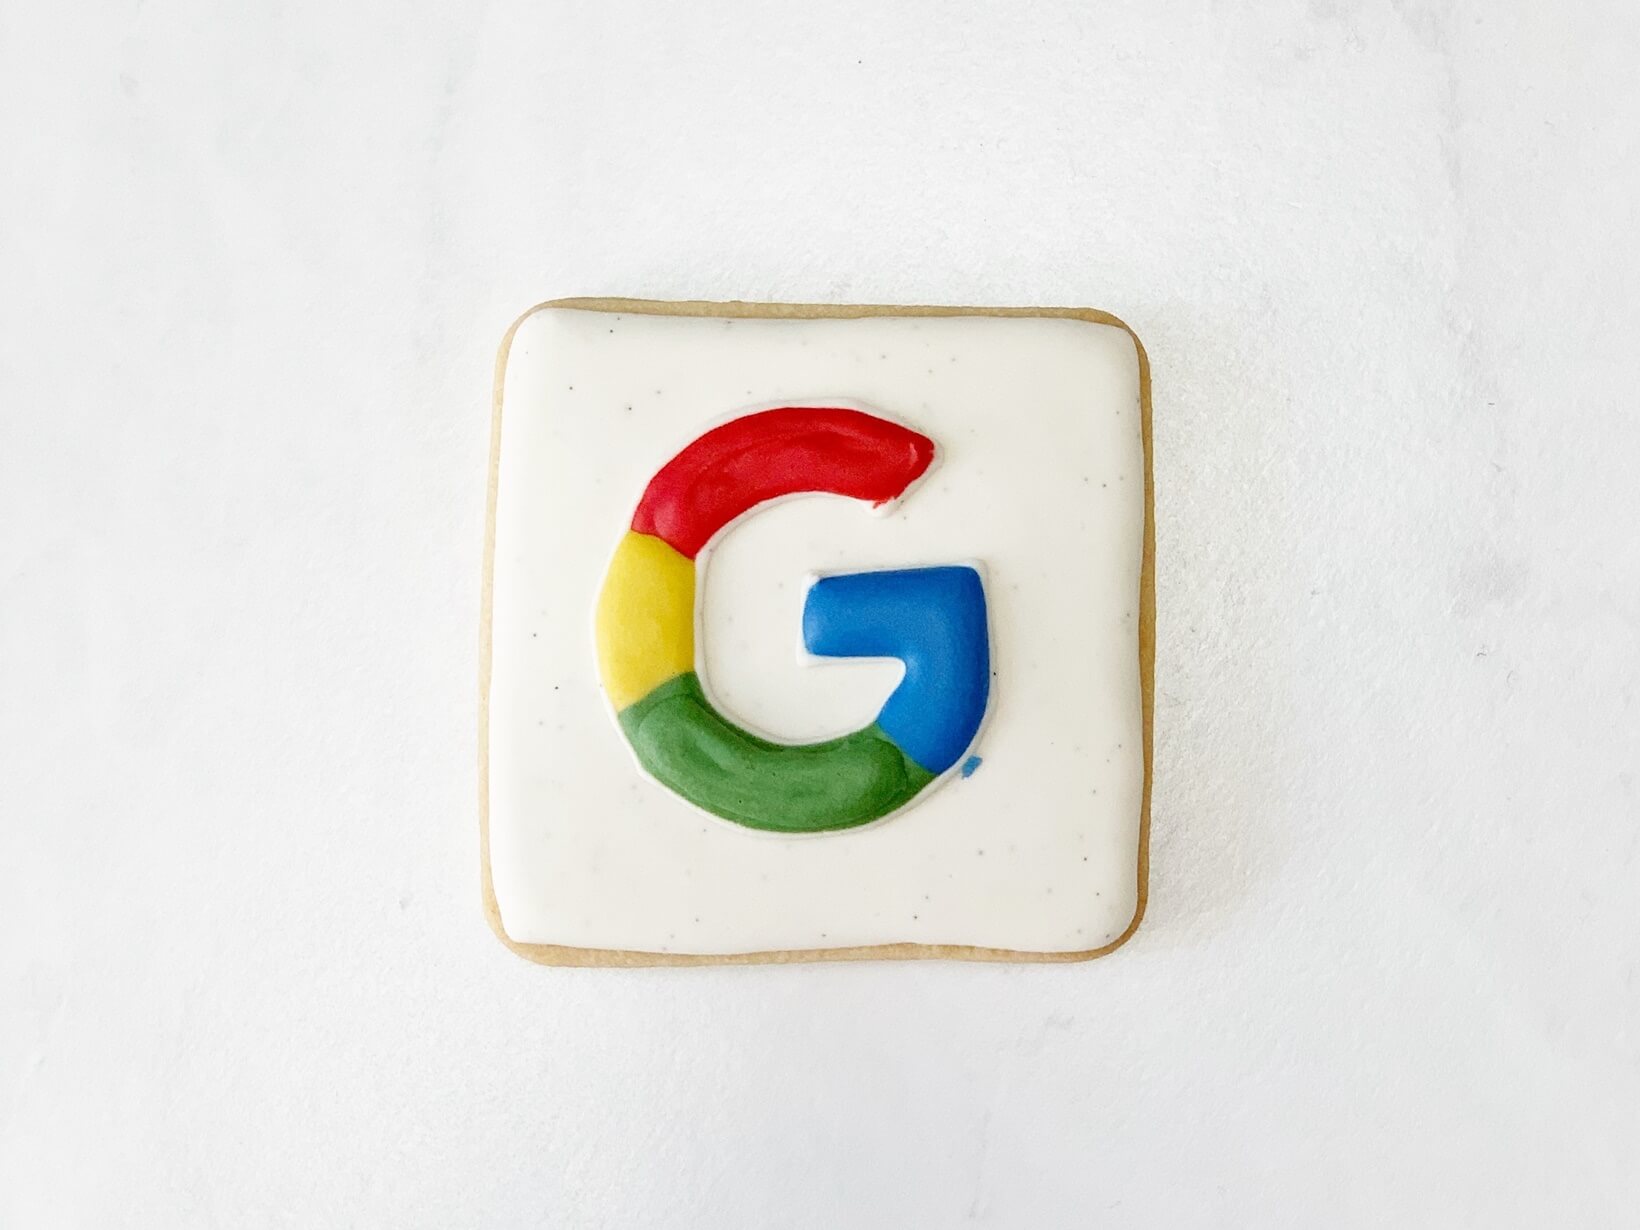 Google cookie